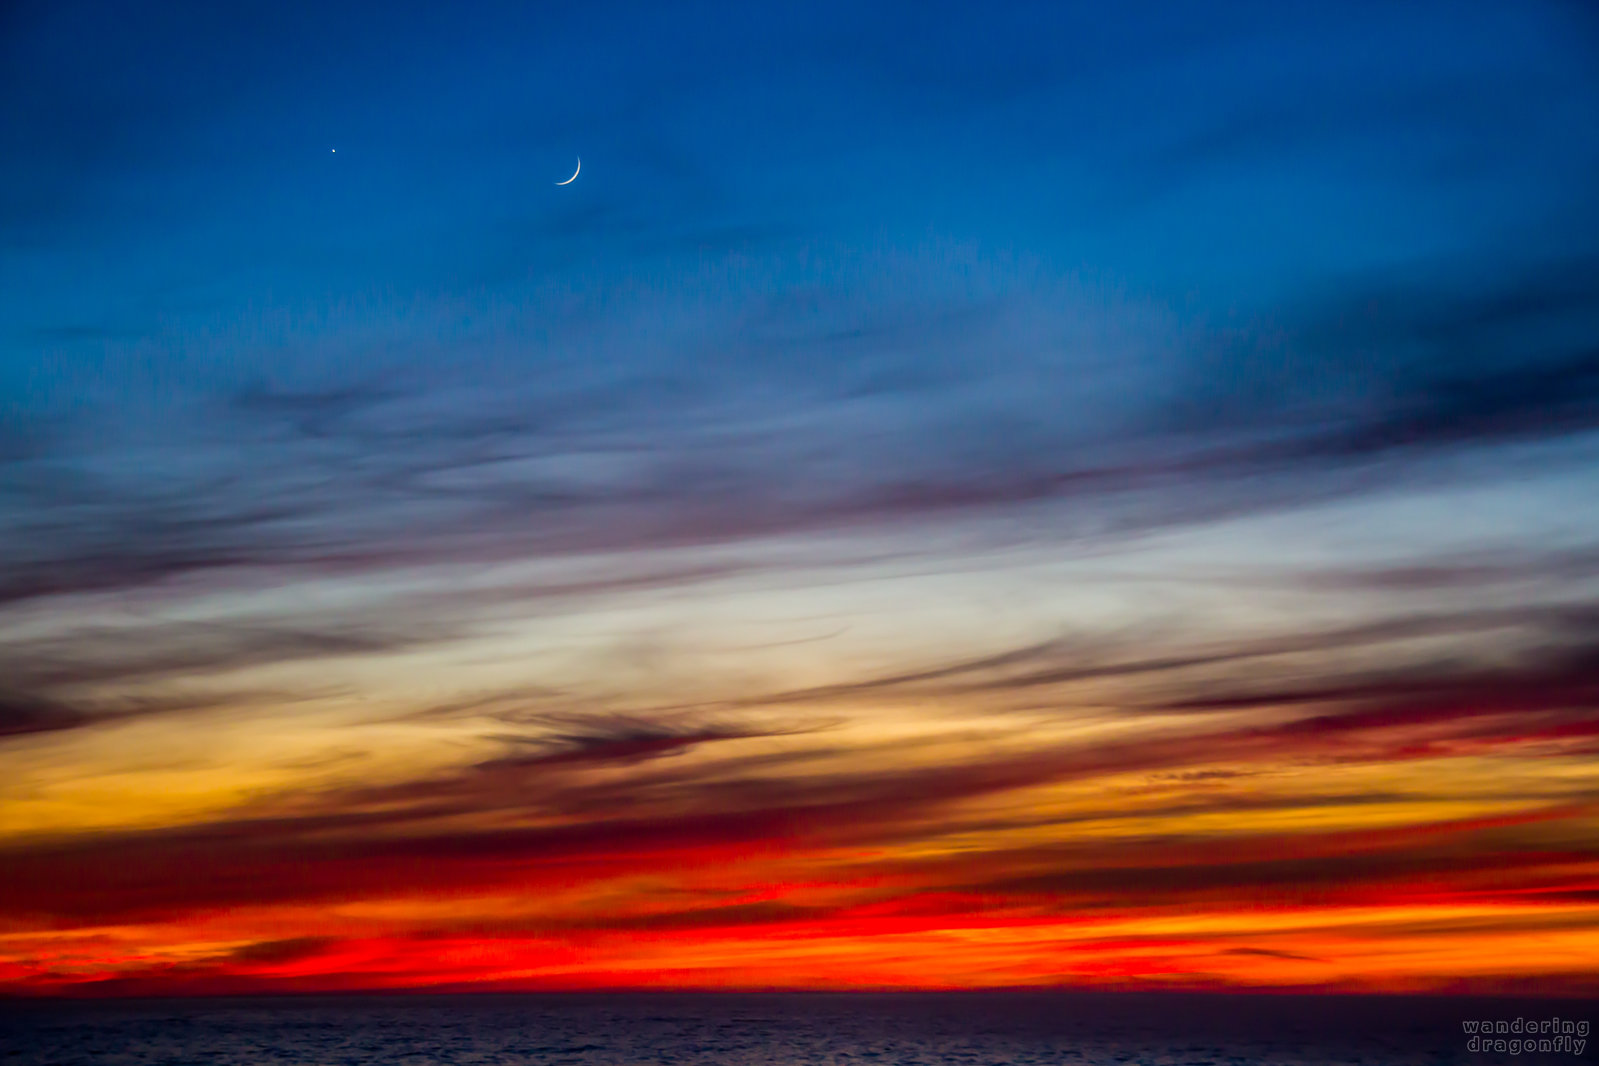 Venus and Moon on the scene -- blue, cloud, moon, ocean, orange, purple, red, sunset, venus, water, white, yellow